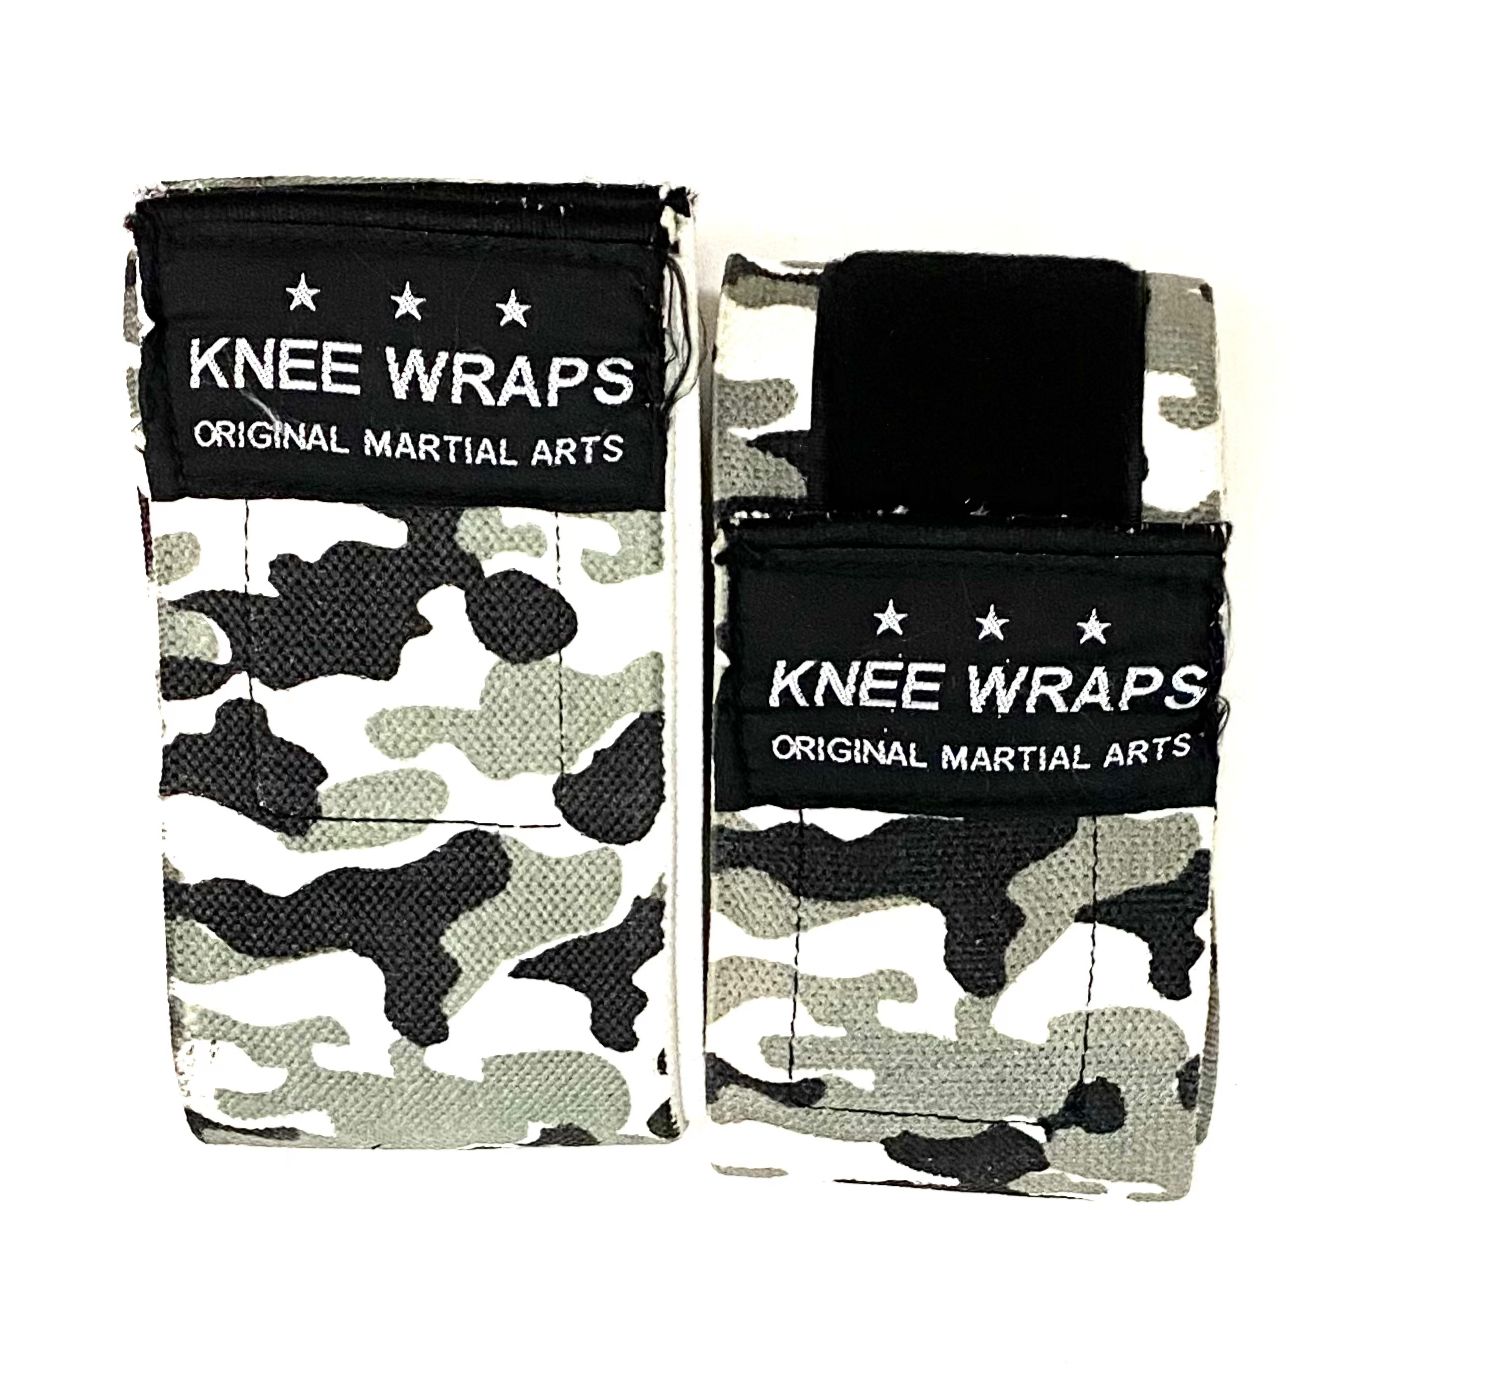 Knee wraps